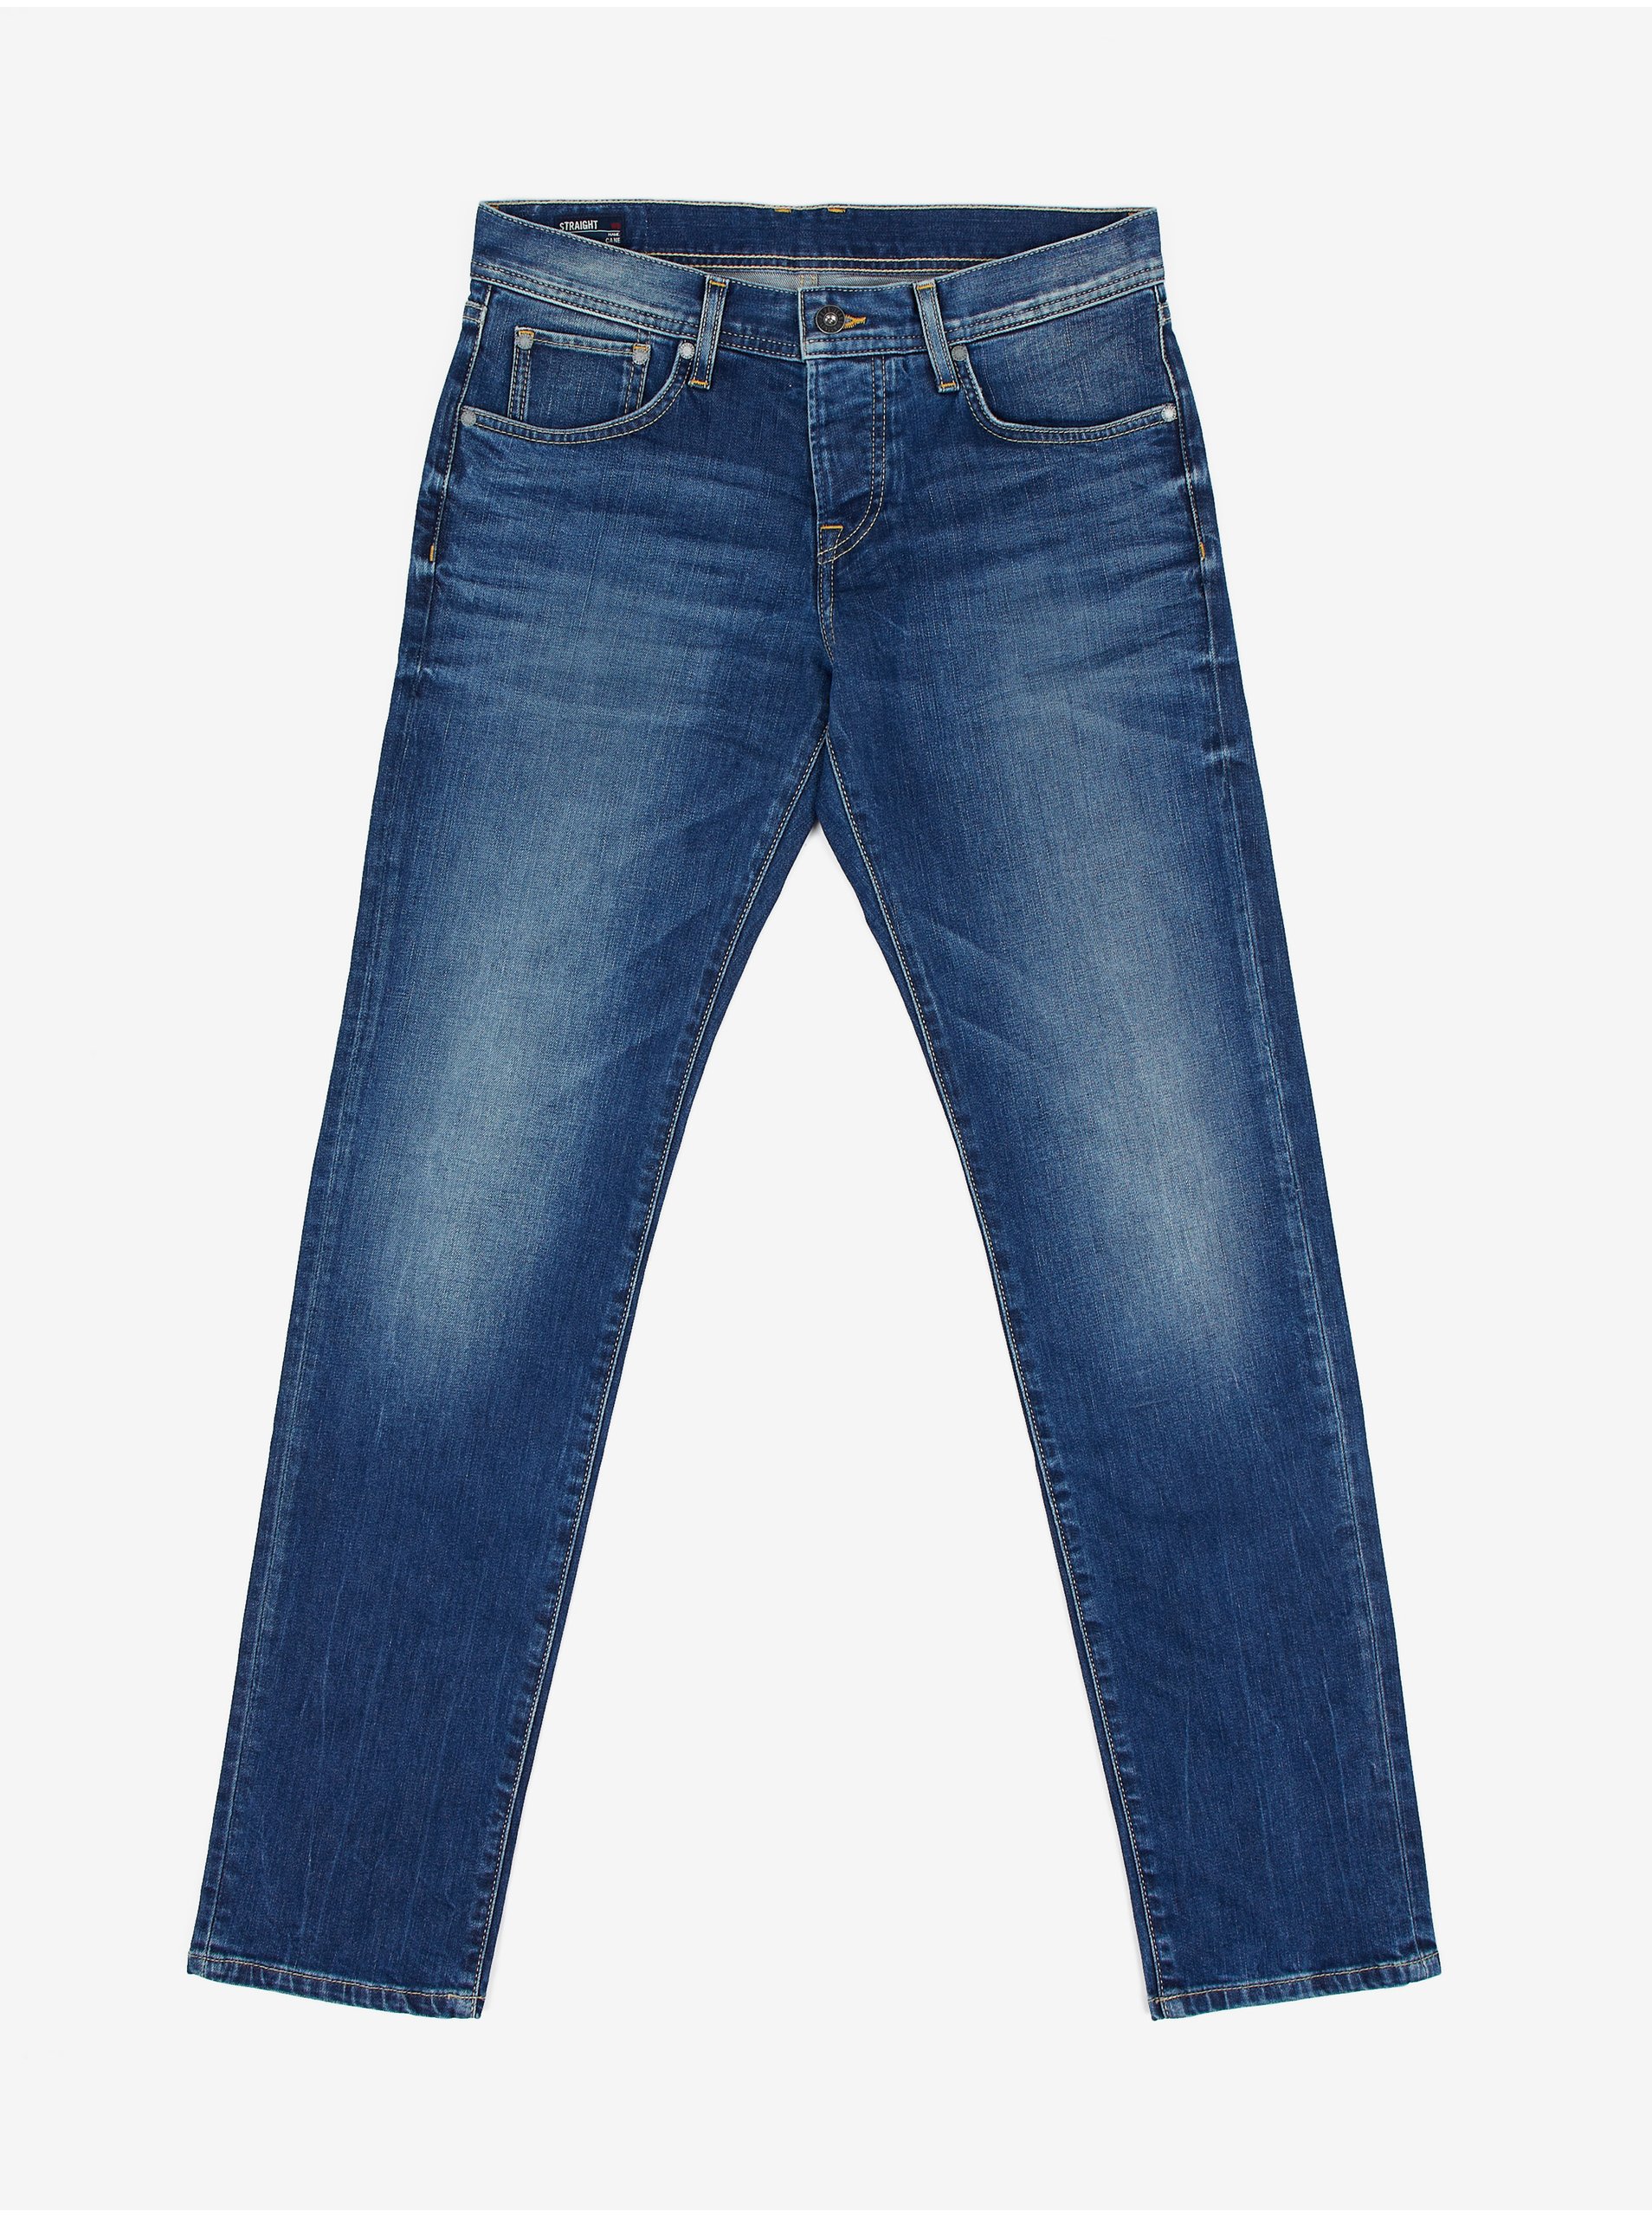 Dark blue men's slim fit jeans Pepe Jeans Cane - Men